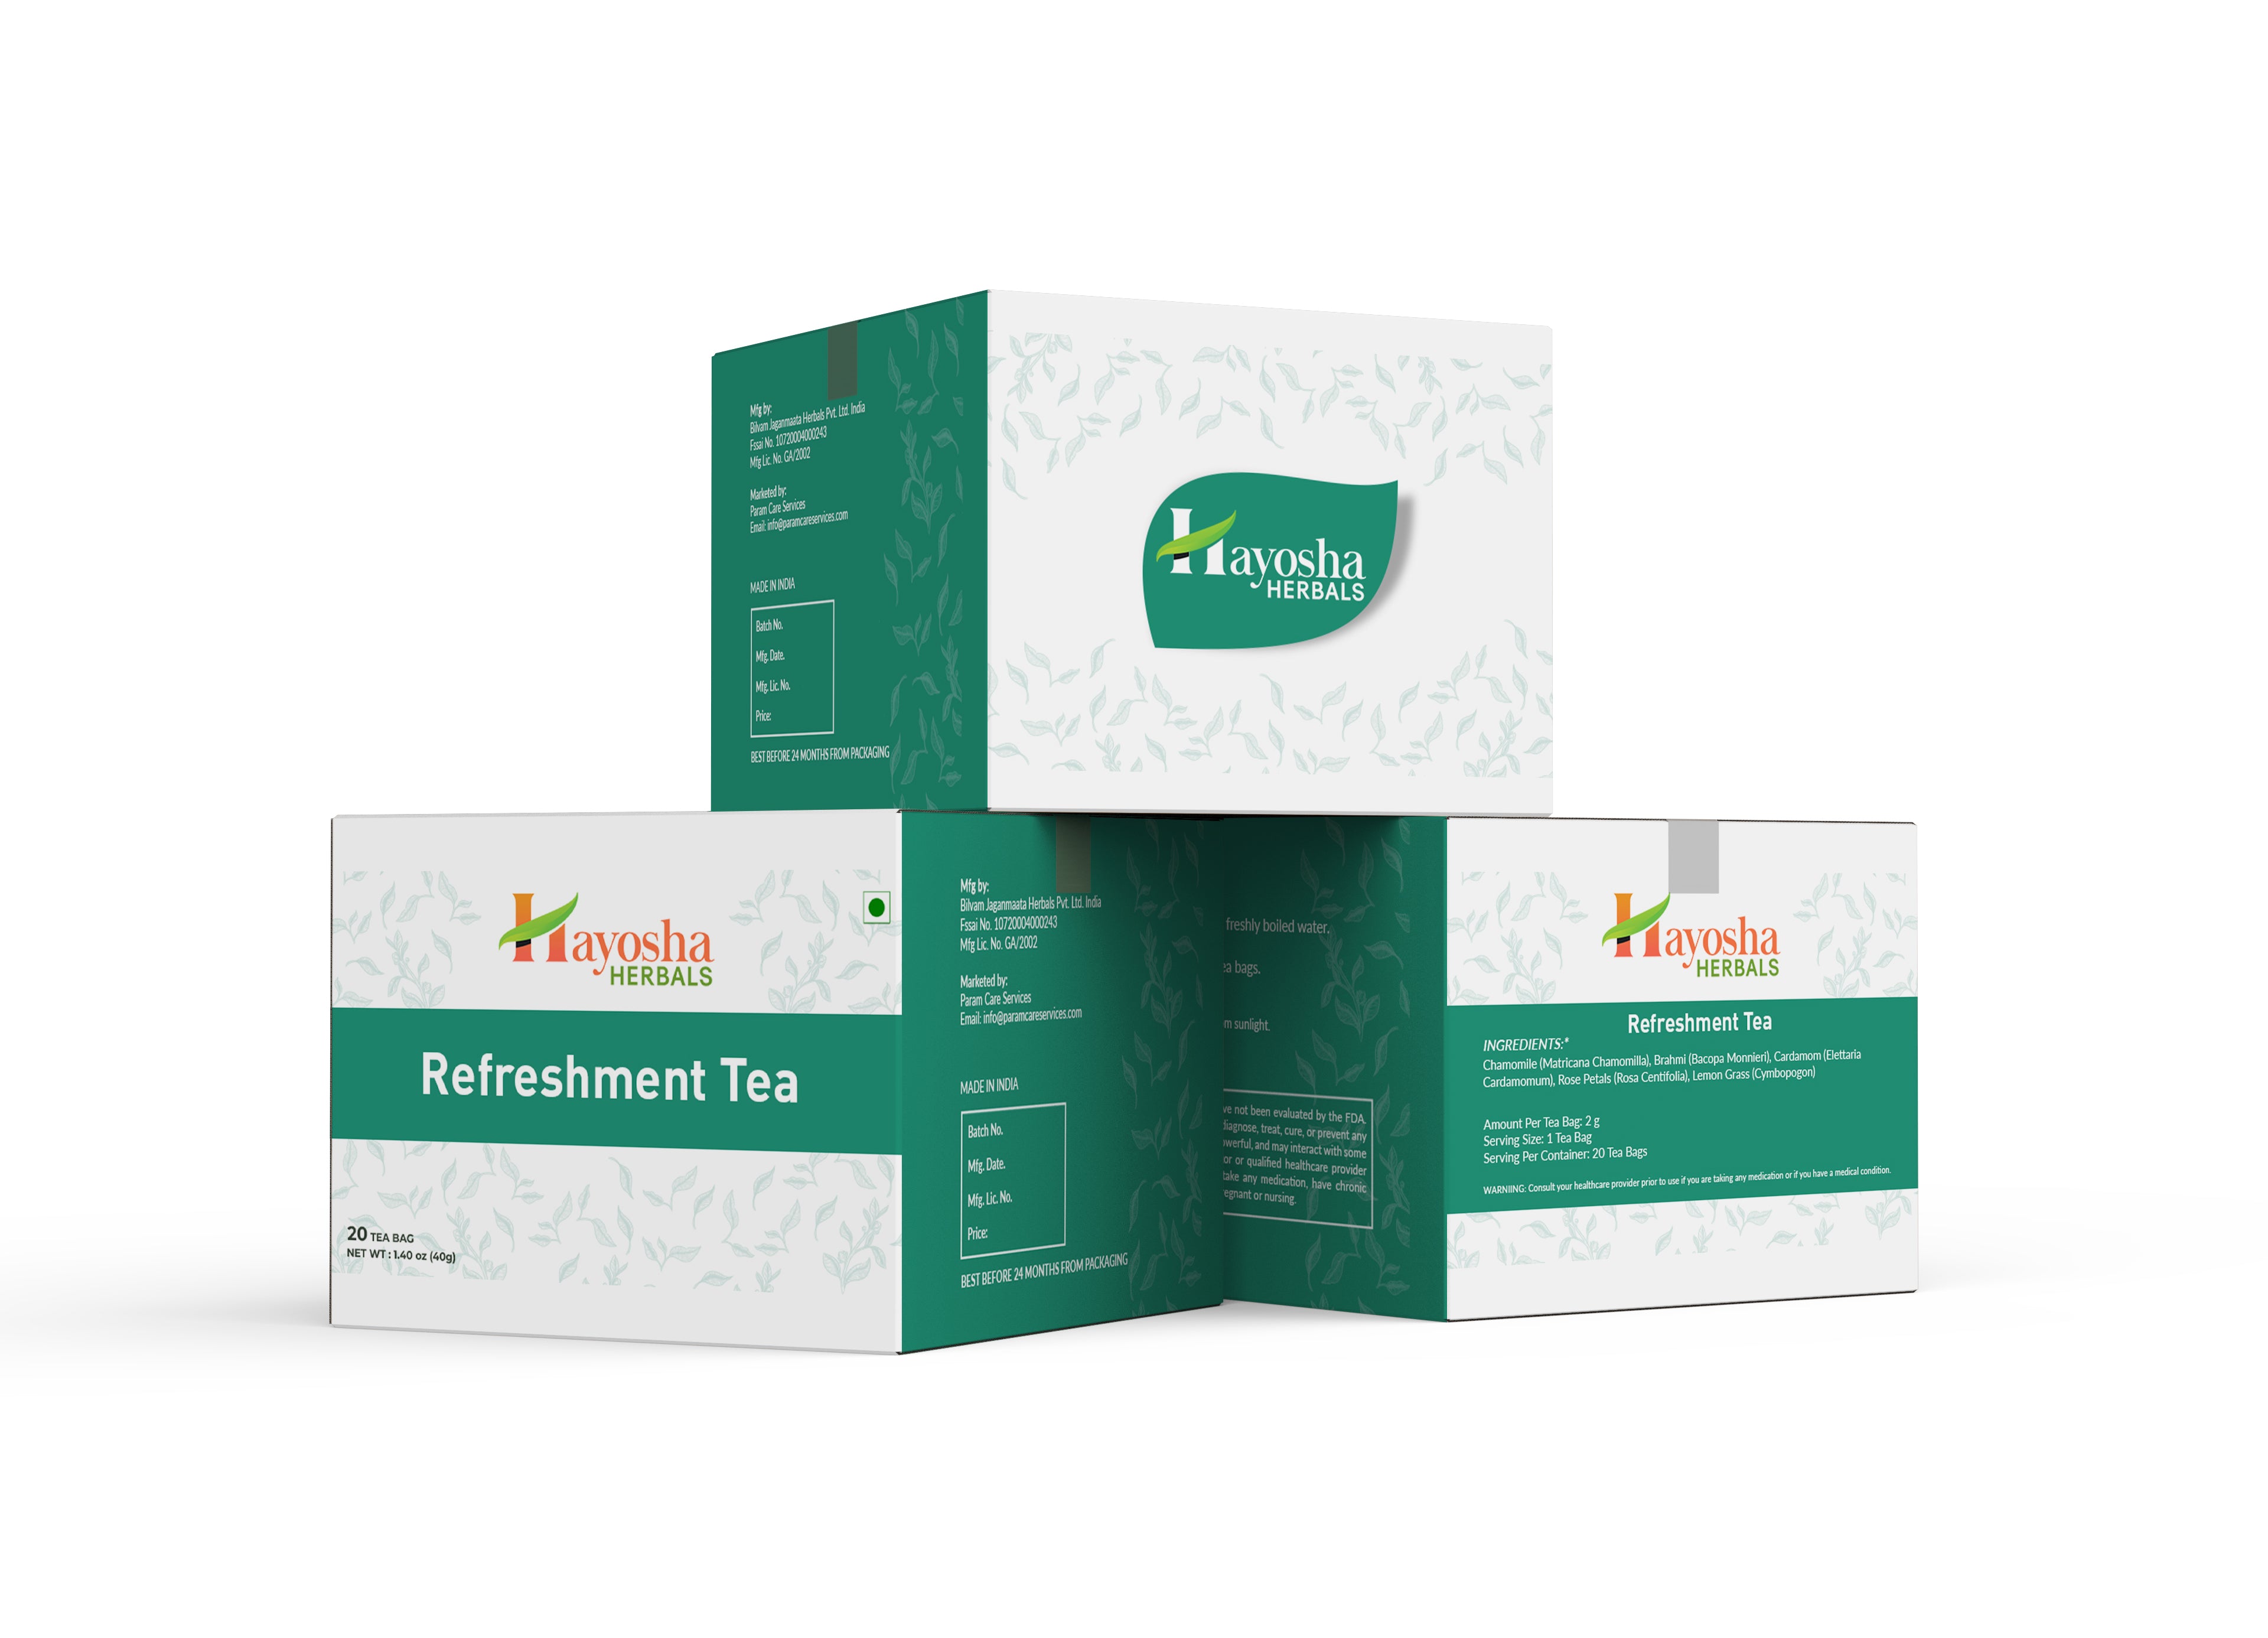 Hayosha Herbals - Refreshment Tea